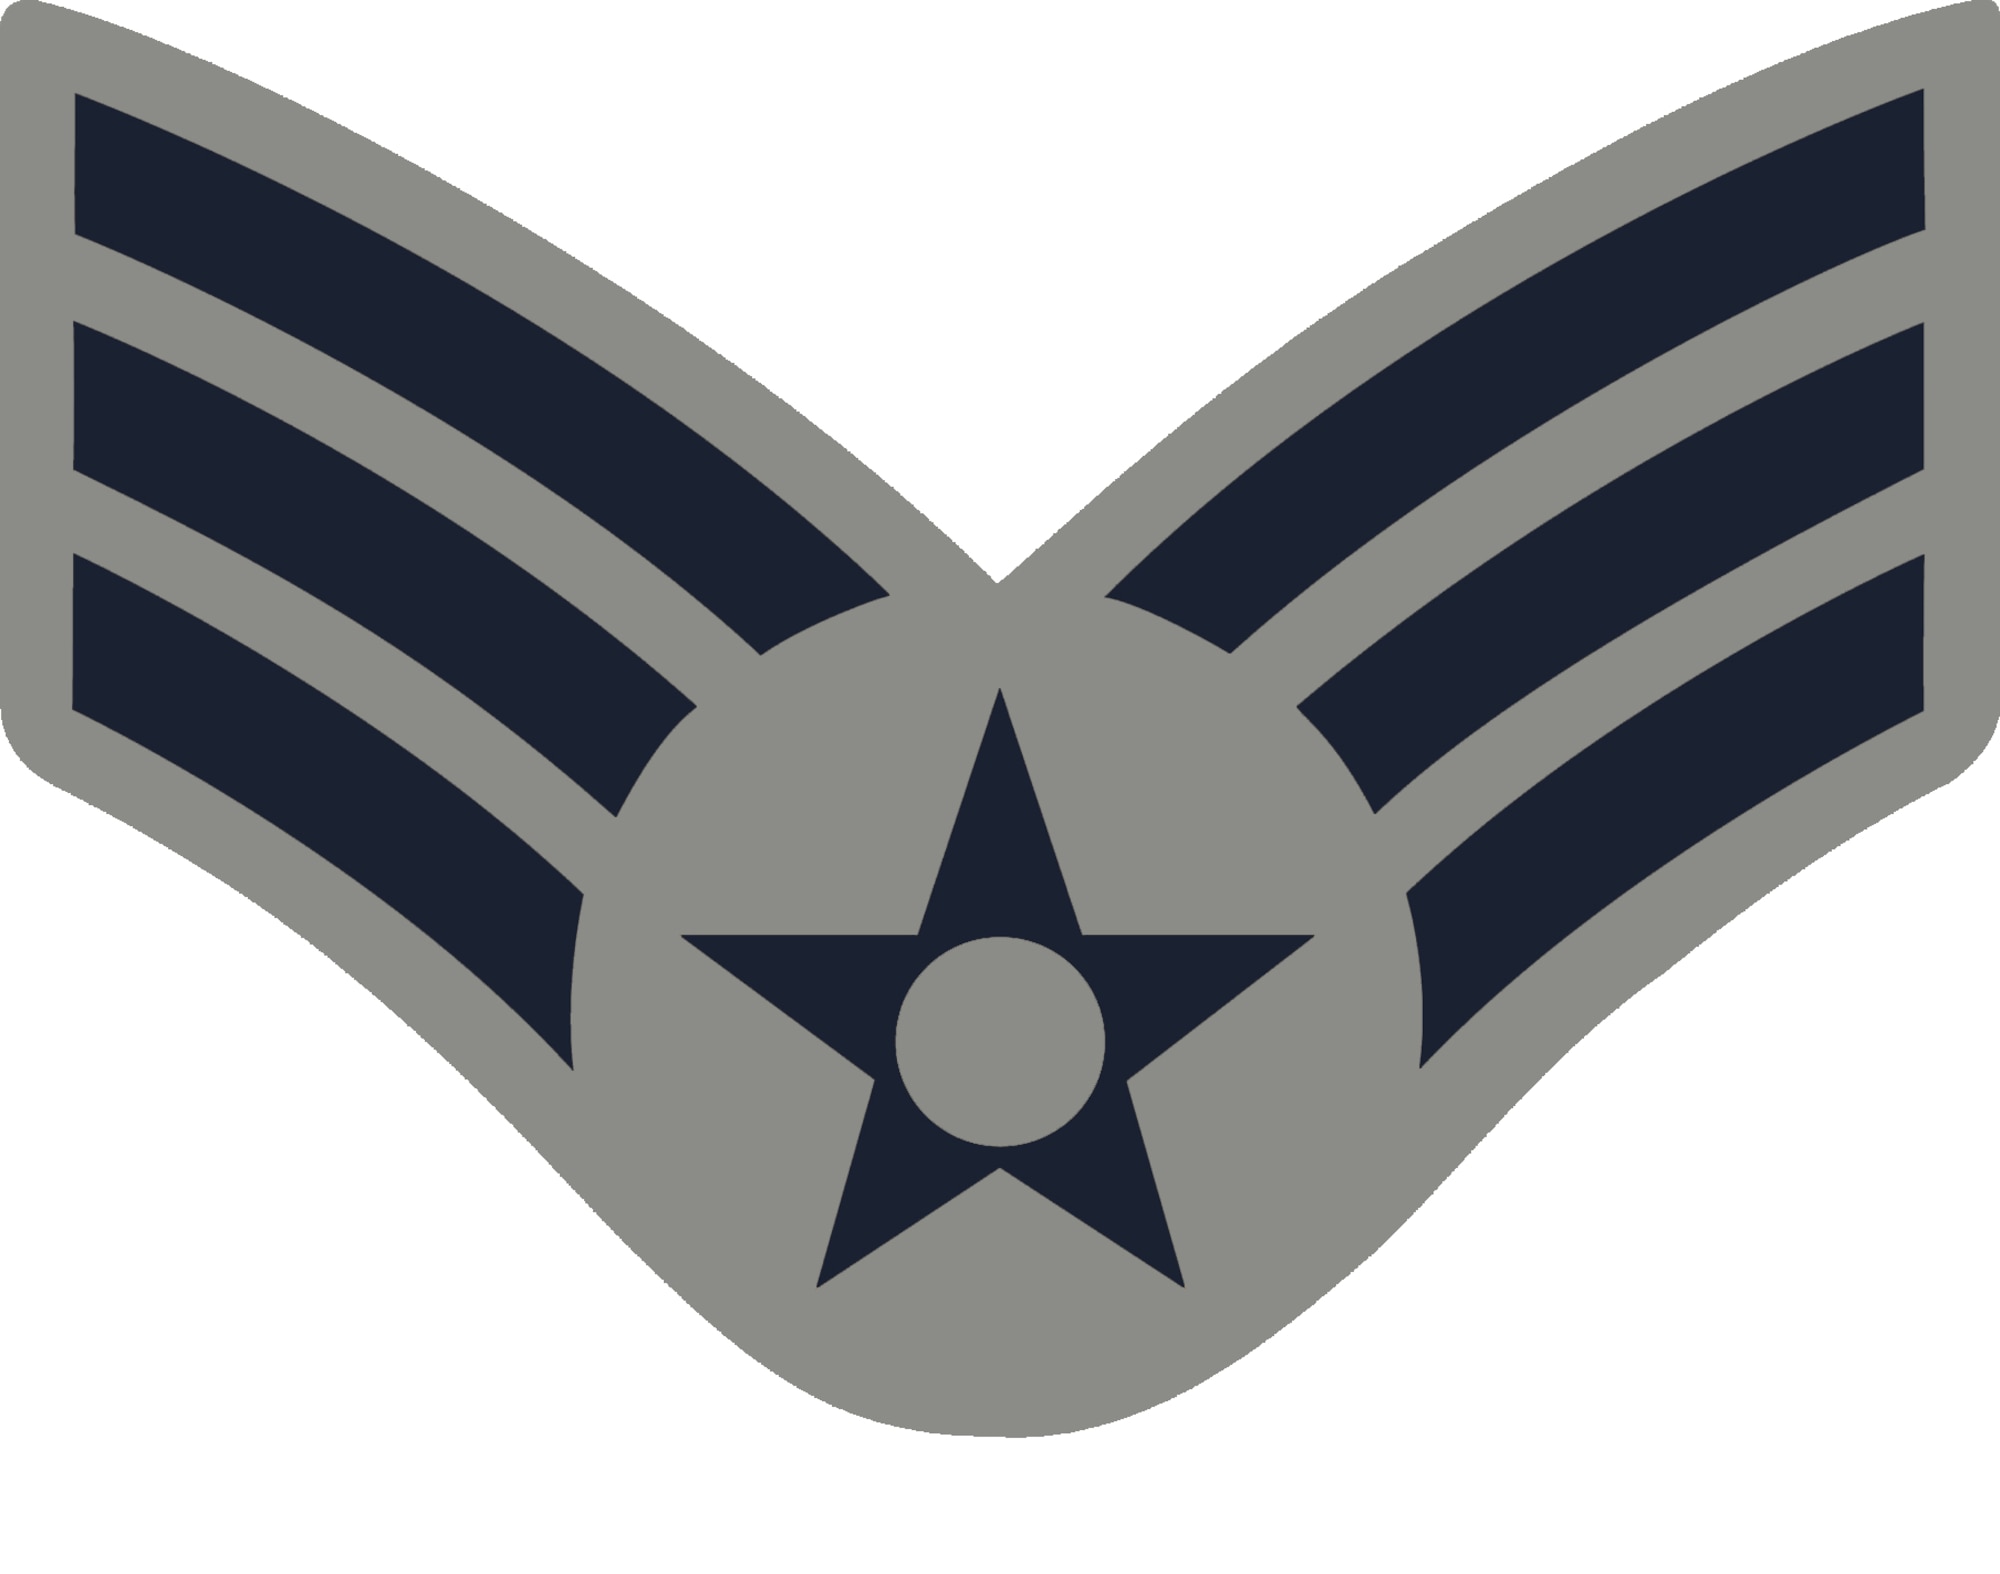 Senior Airman, E-4, (ABU color), U.S. Air Force graphic